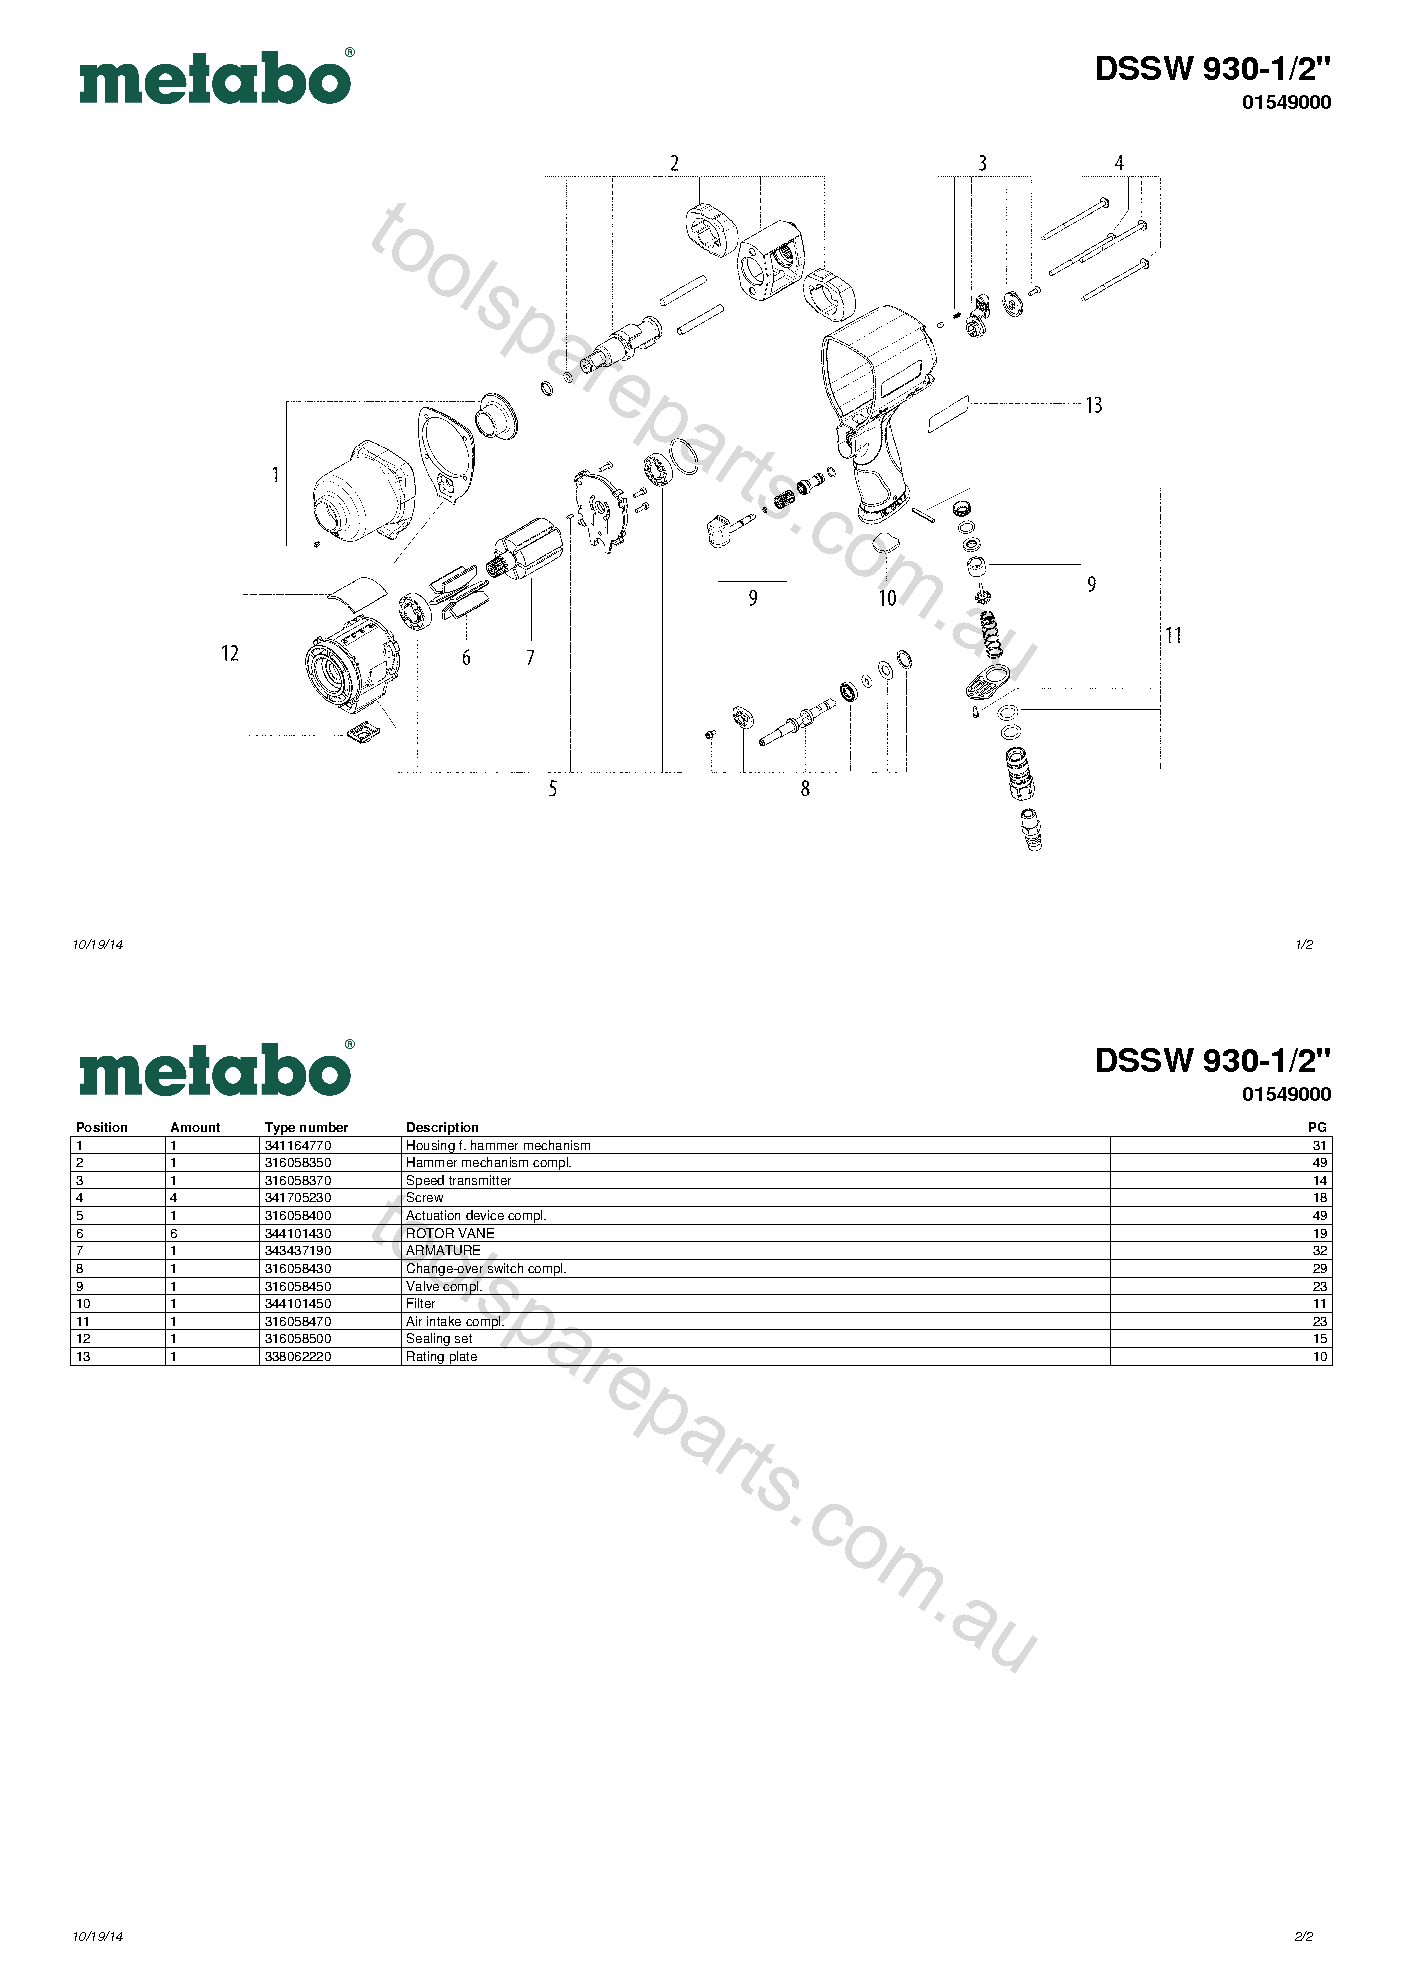 Metabo DSSW 930-1/2